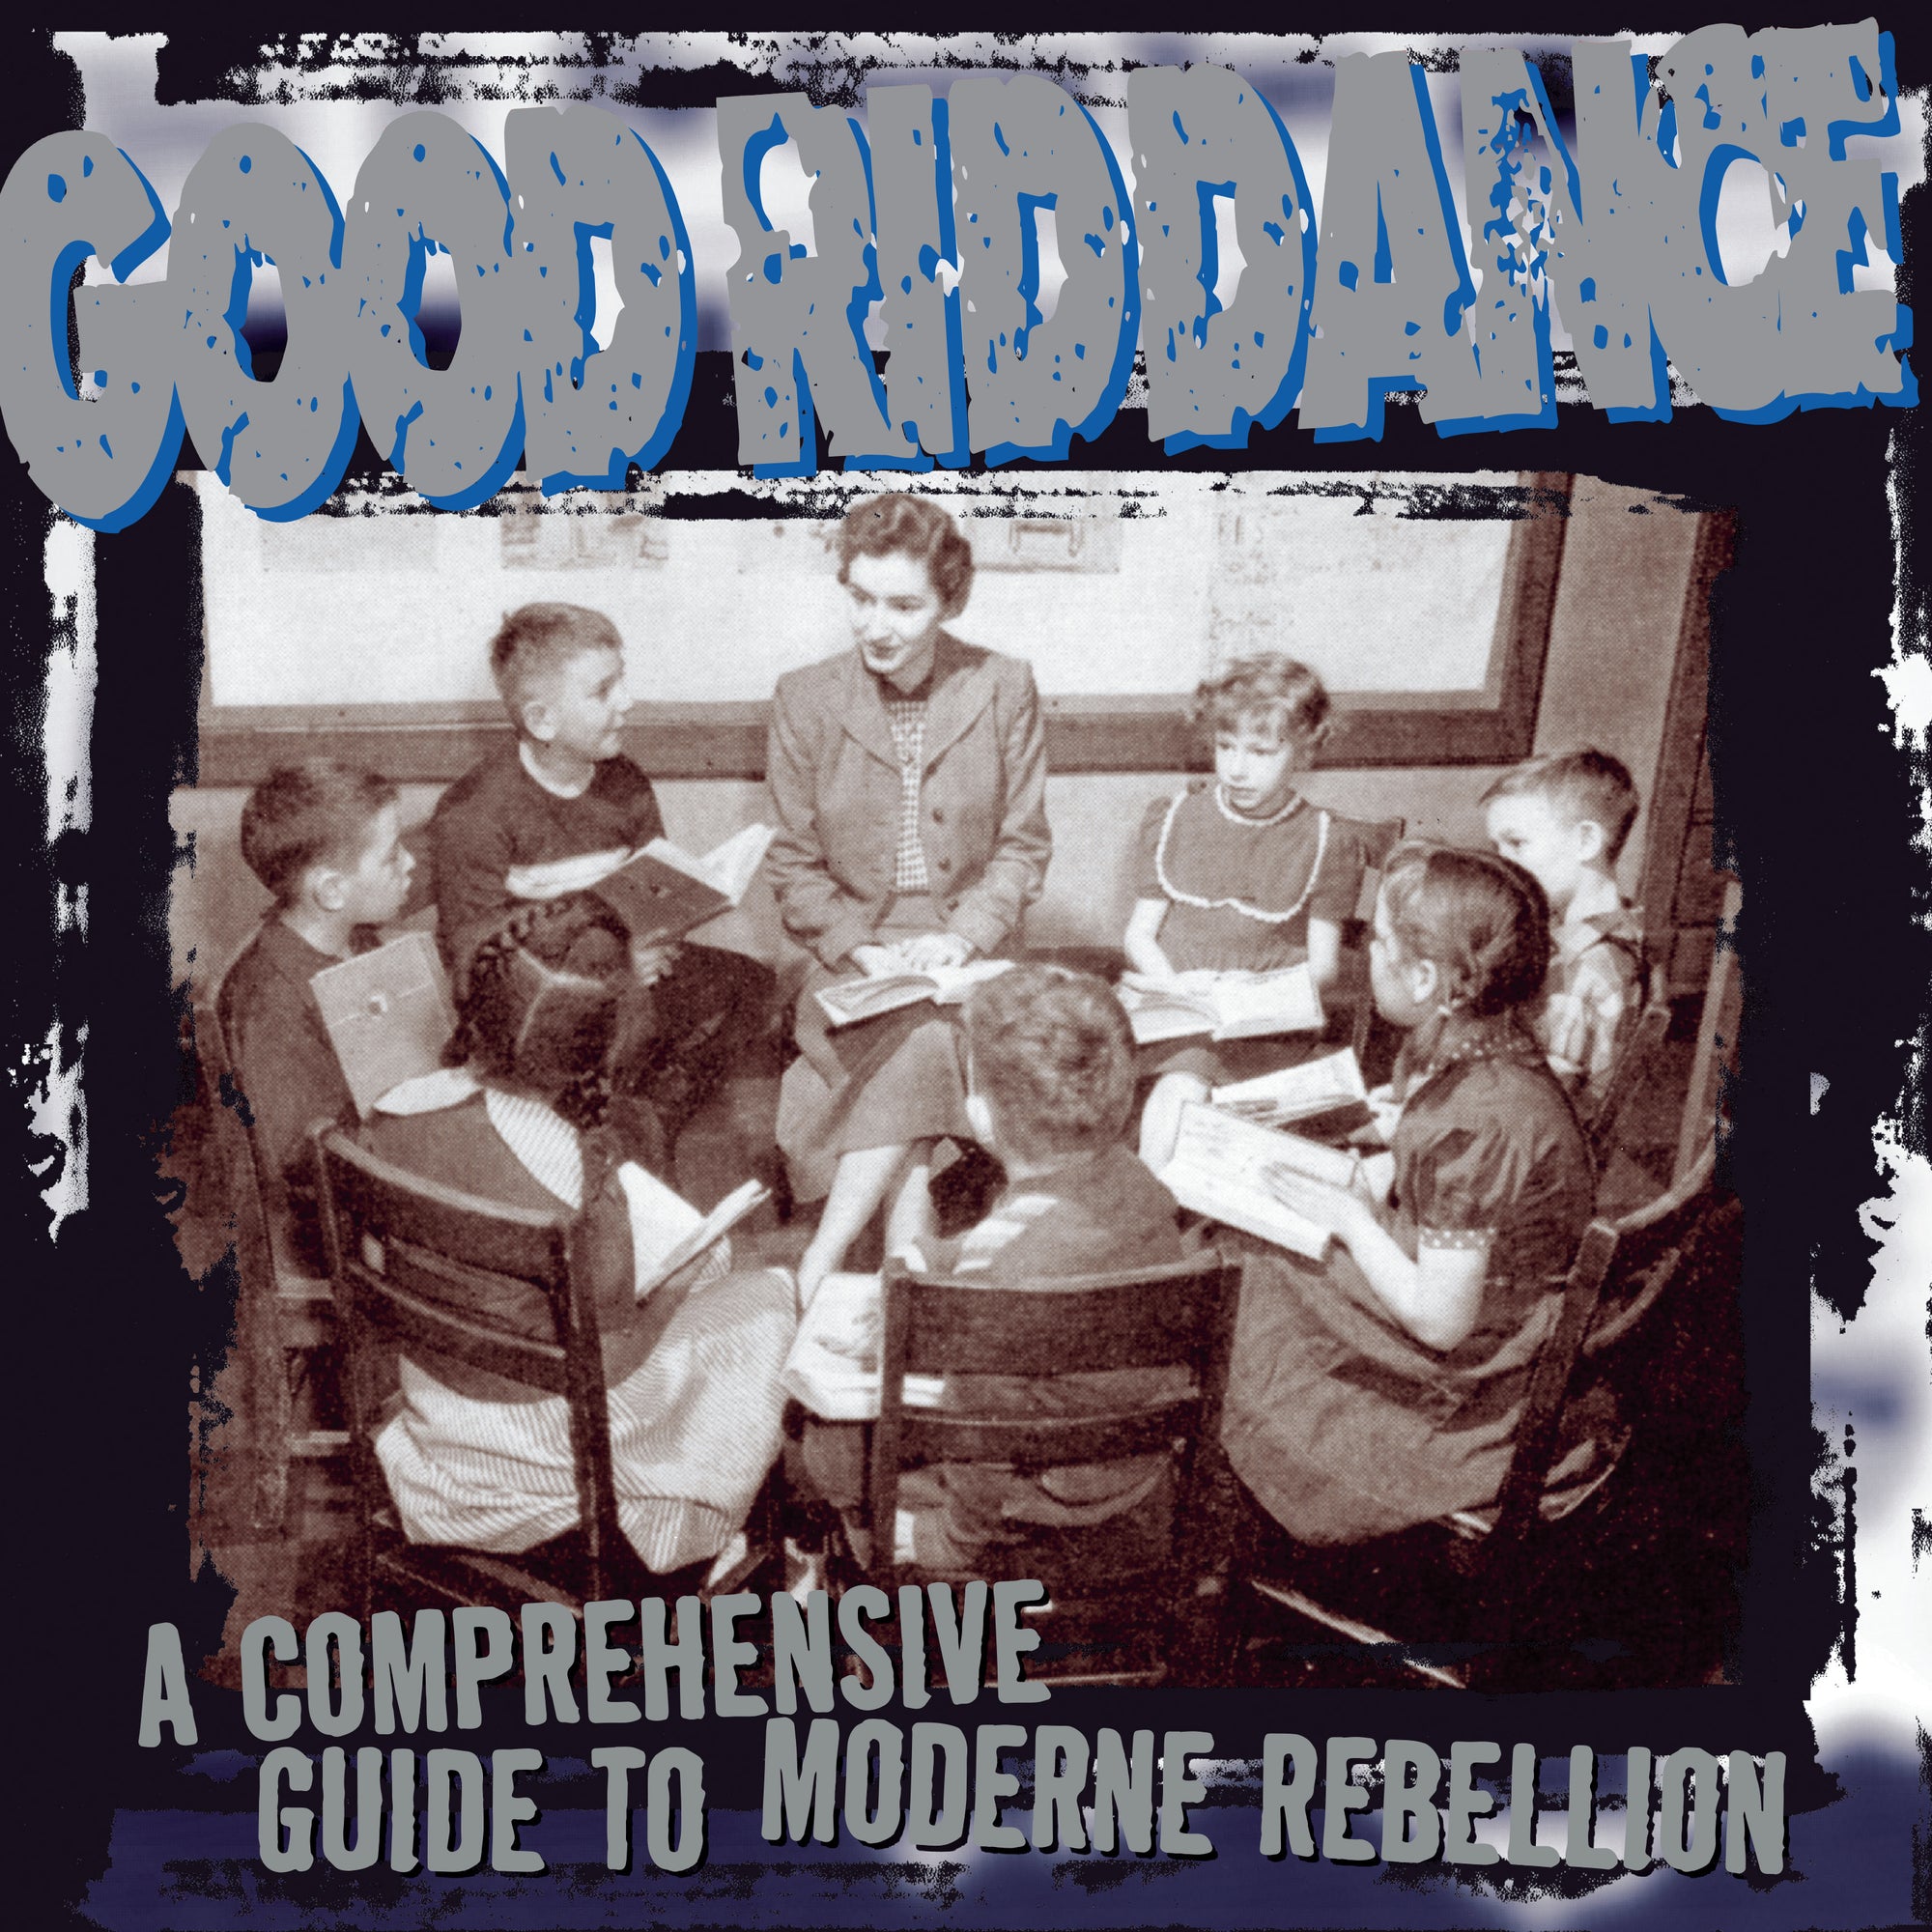 A Comprehensive Guide To Moderne Rebellion